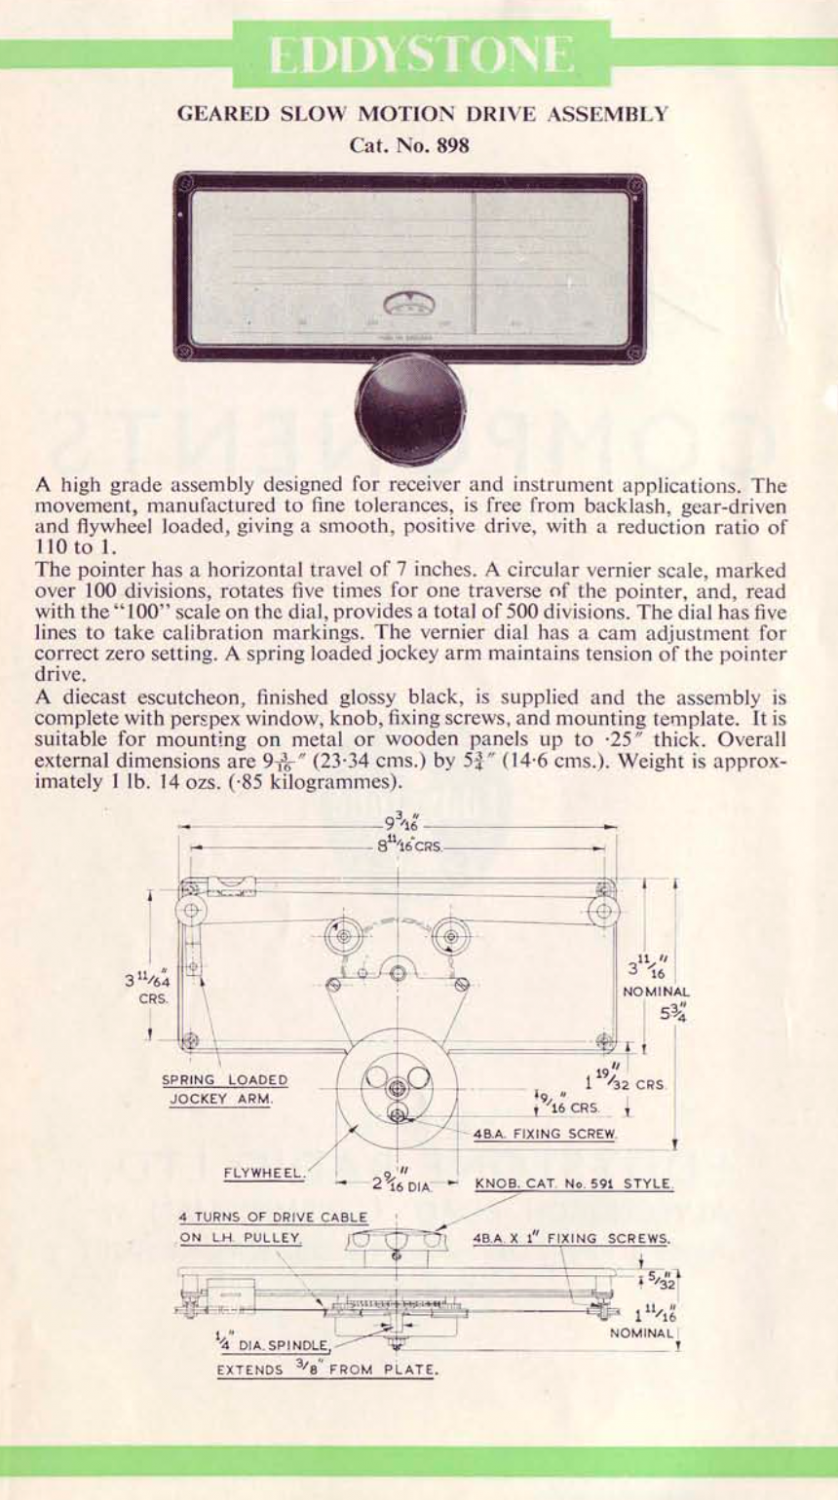 Eddystone Components Catalogue Numbr 898 (1968)